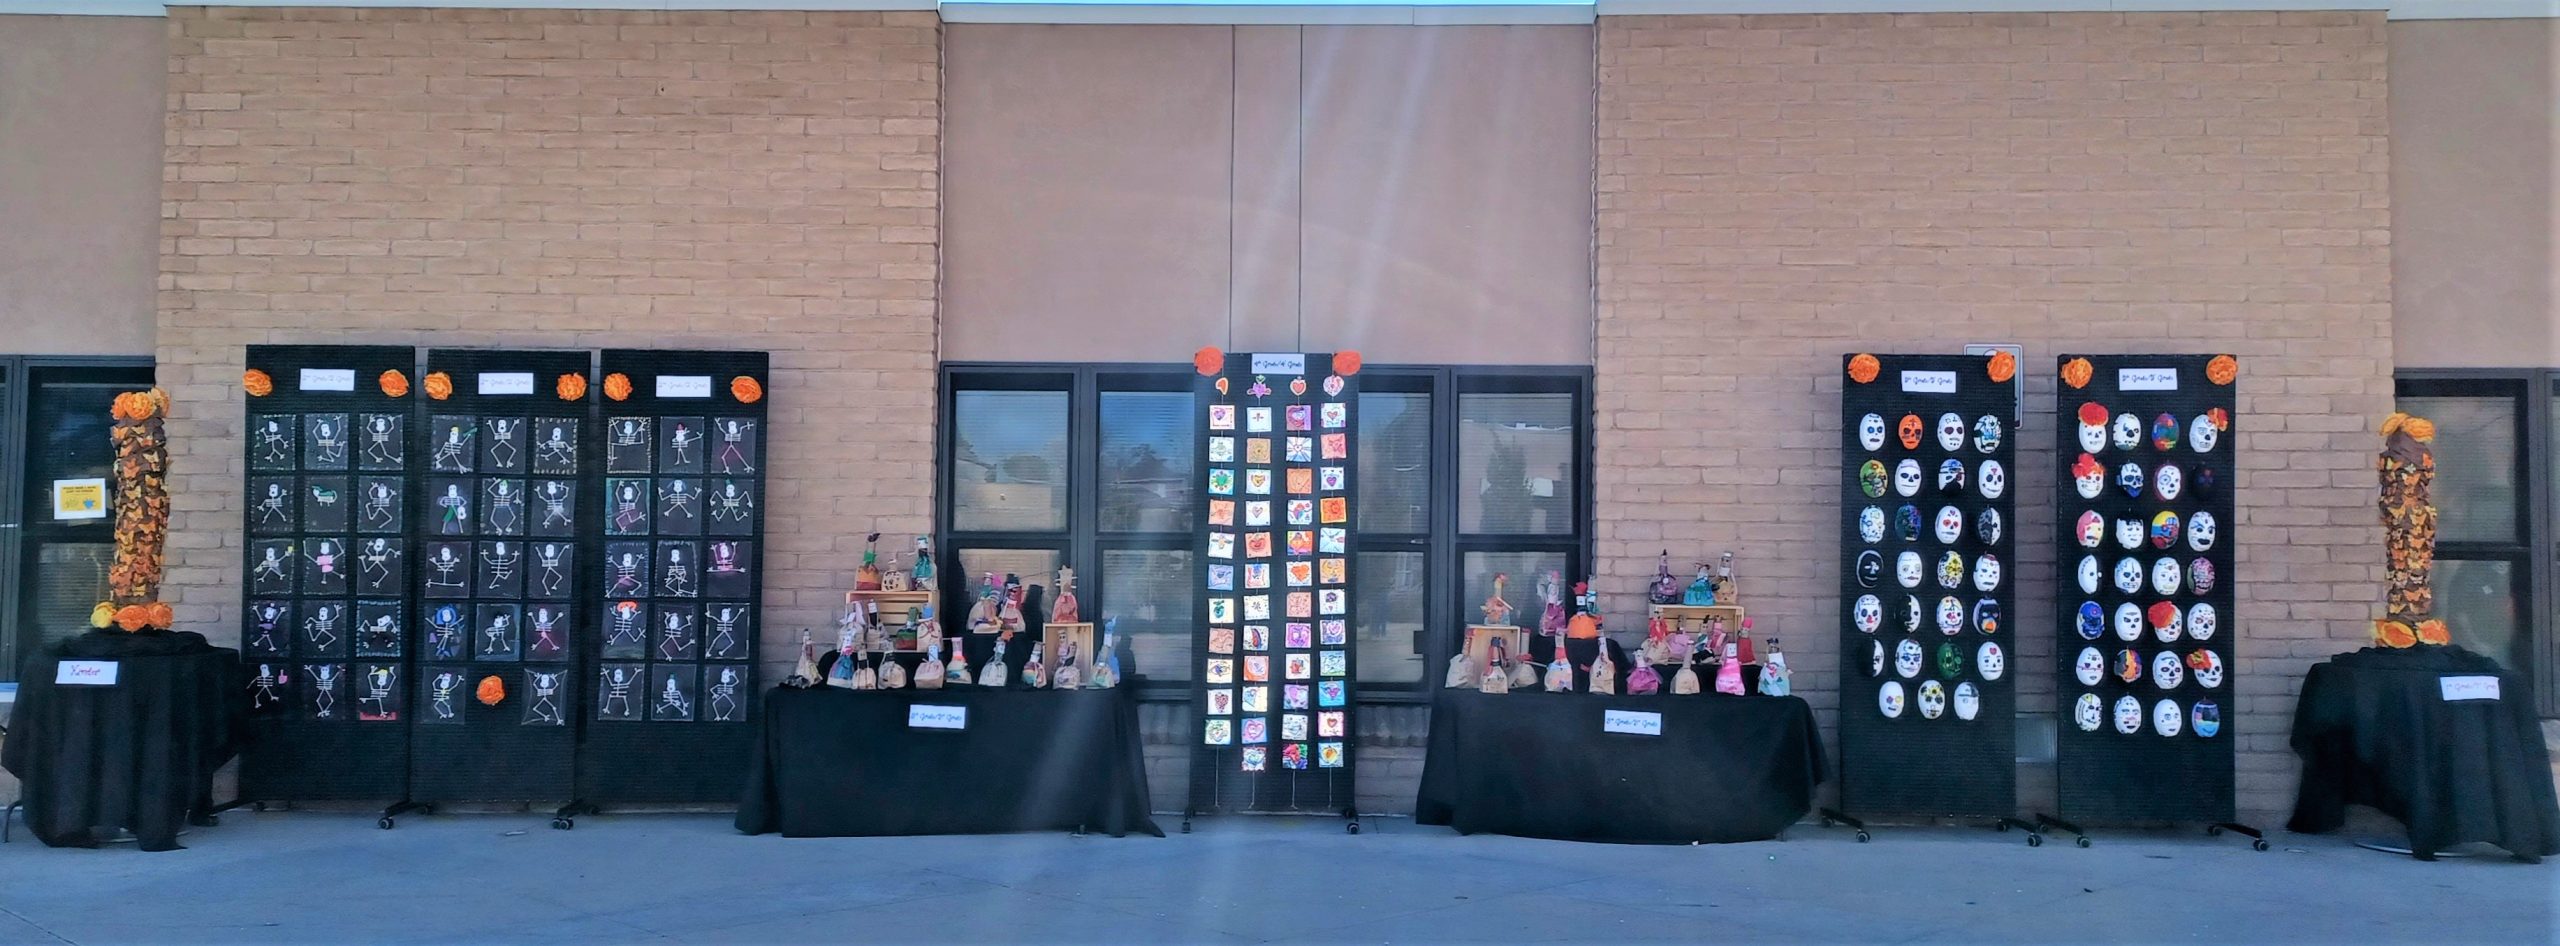 Display for Dia de los Muertos featuring student artwork